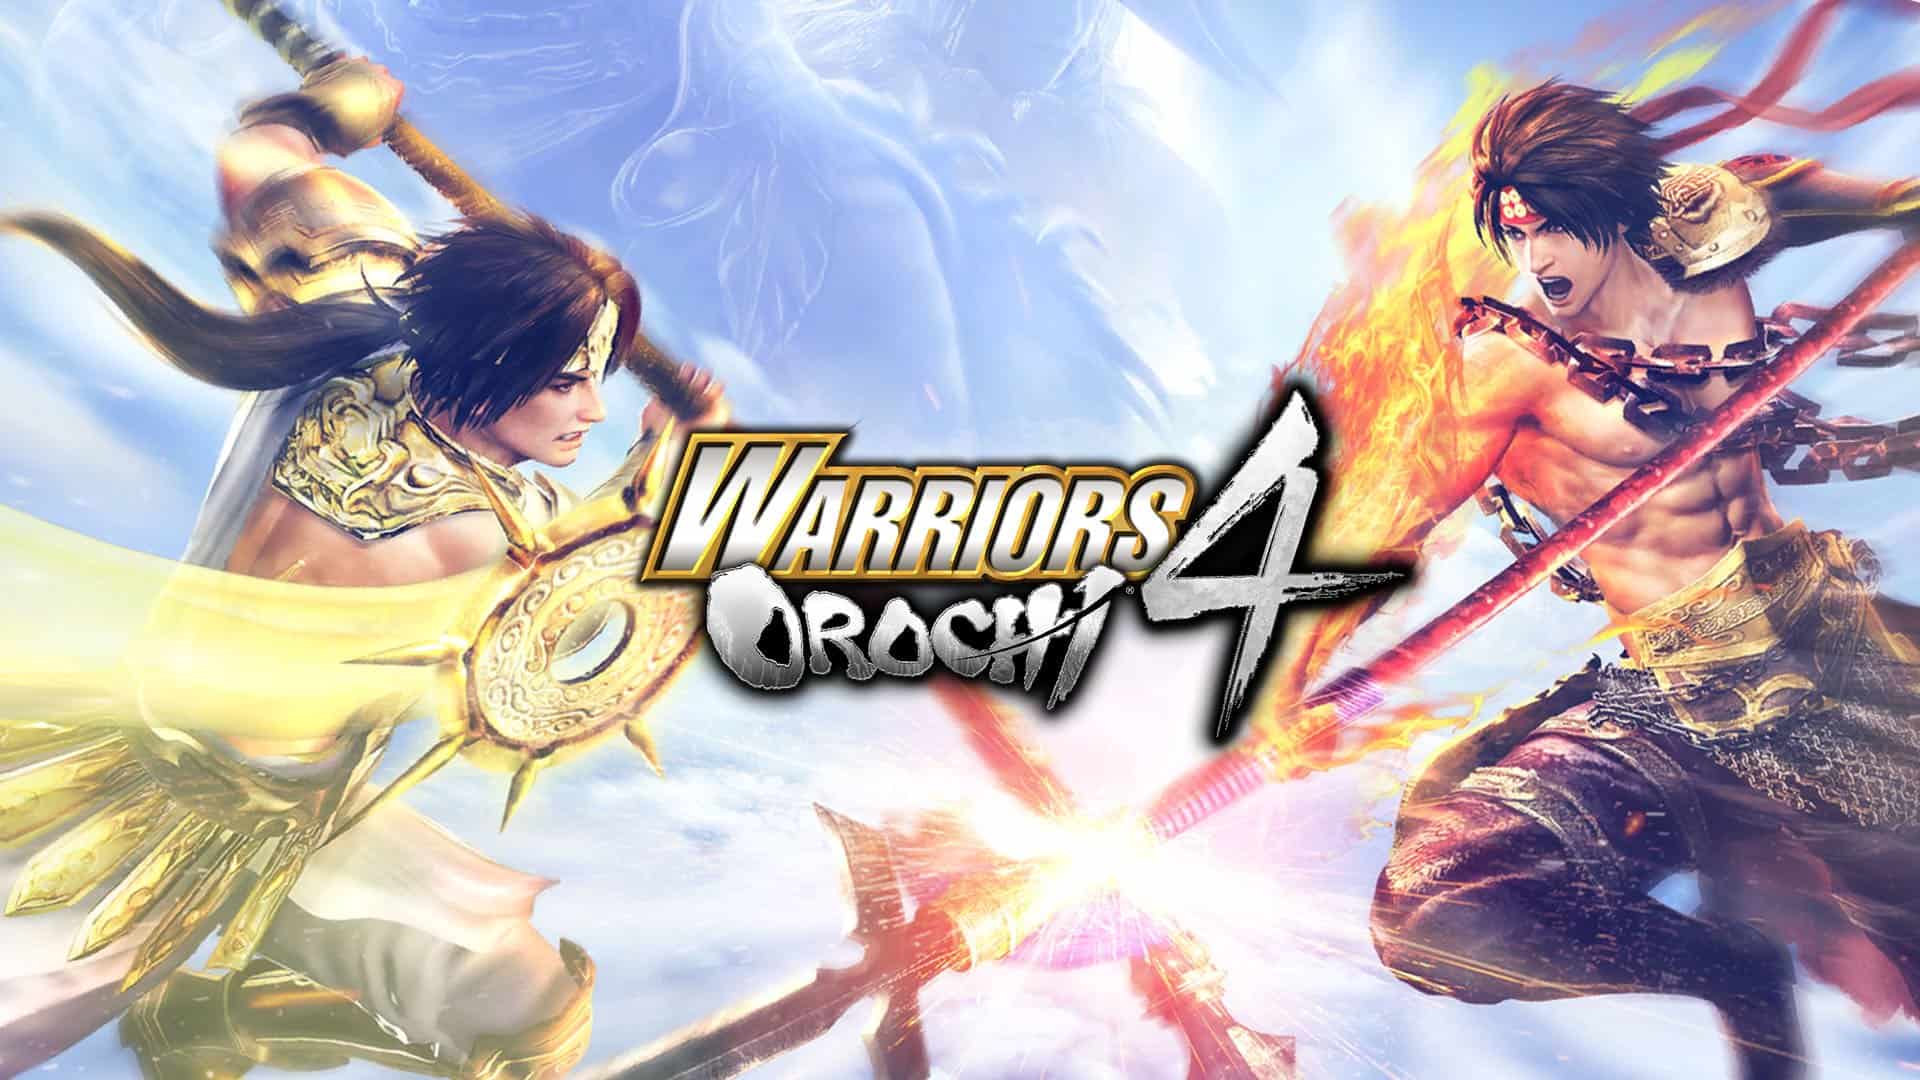 Warriors orochi 2 psp save data game files